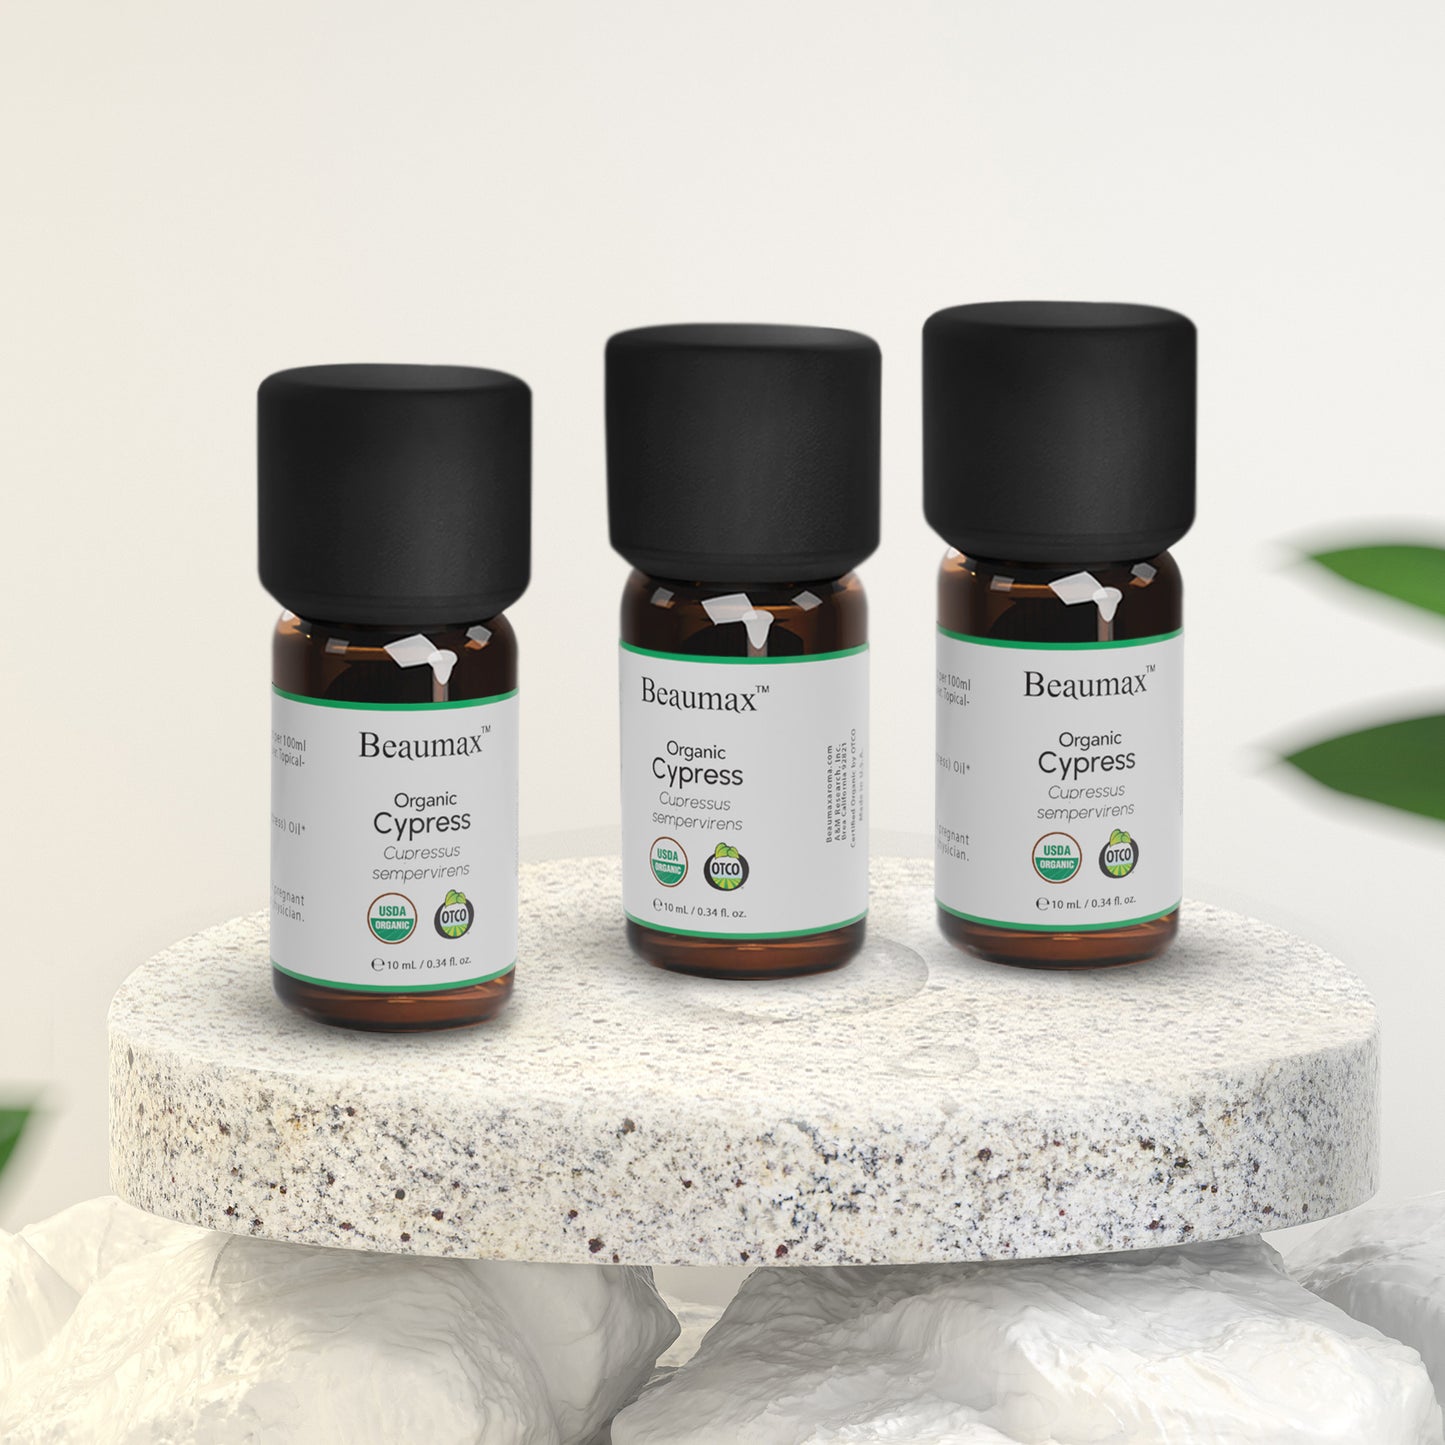 Cypress Organic Essential Oil (Cupressus Sempervirens) 10ml